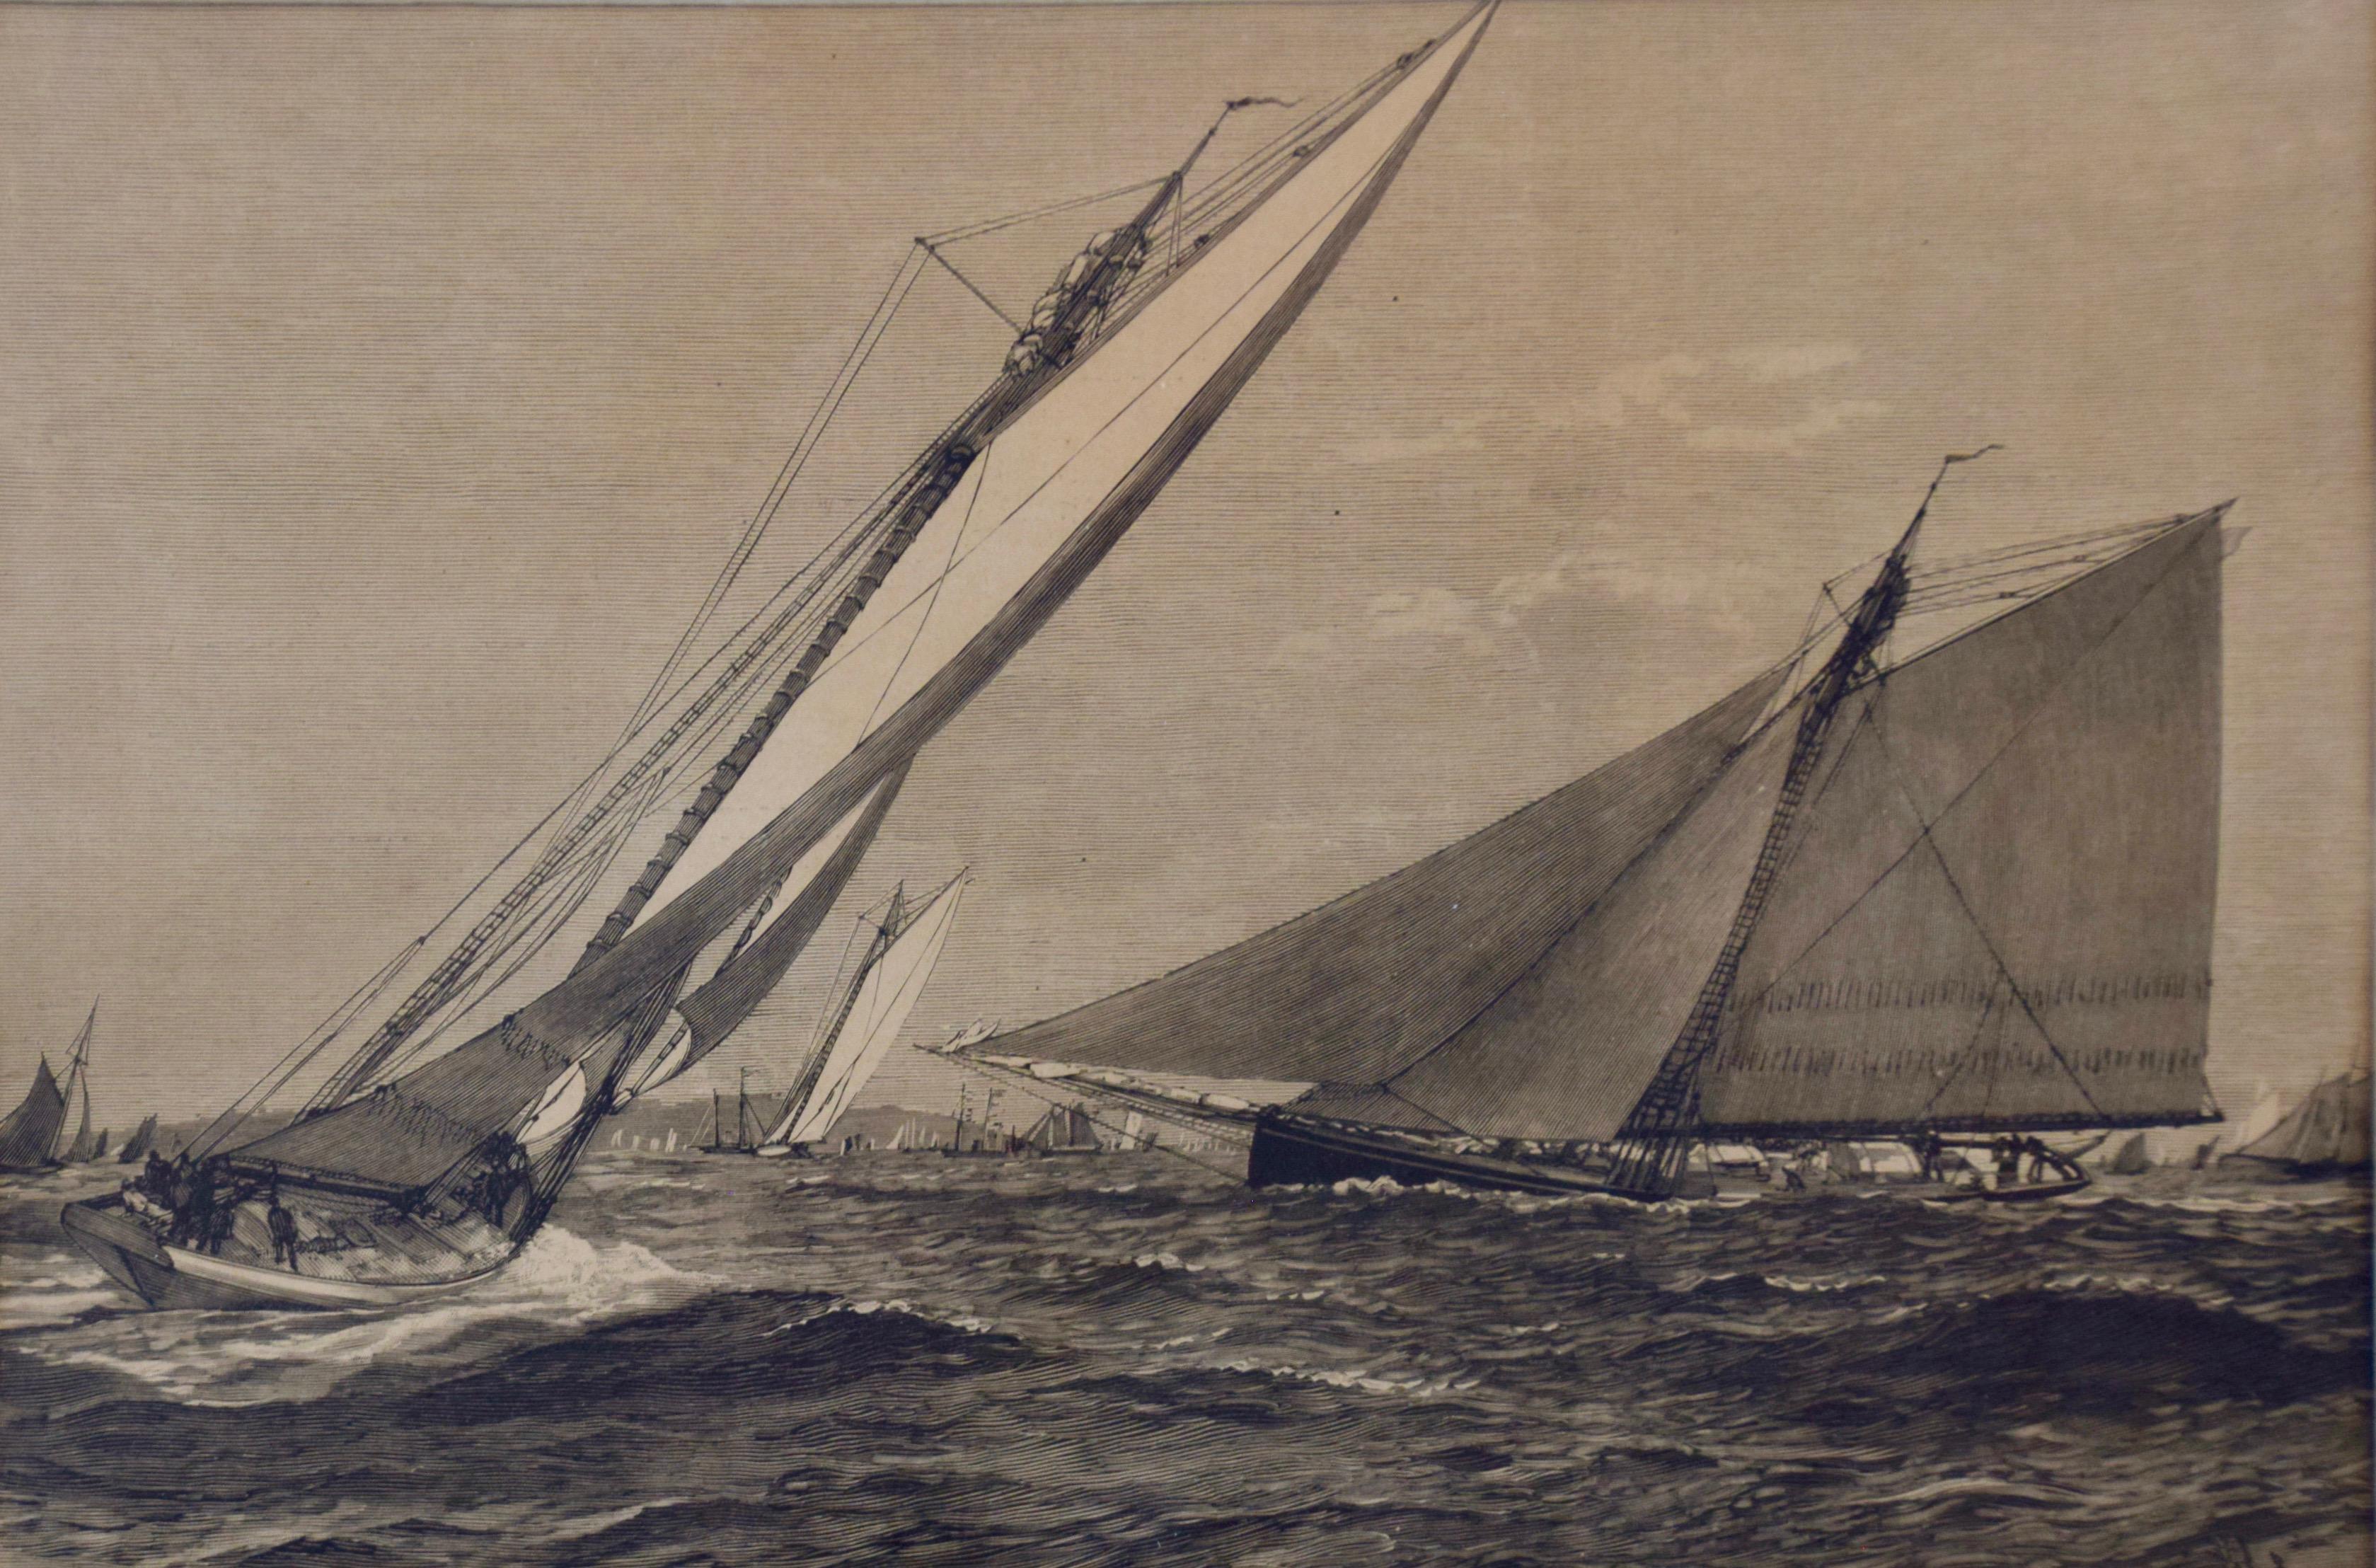 1885 America's Cup Sailing Yachts: Set of 3 Original 19th C. Engravings 8